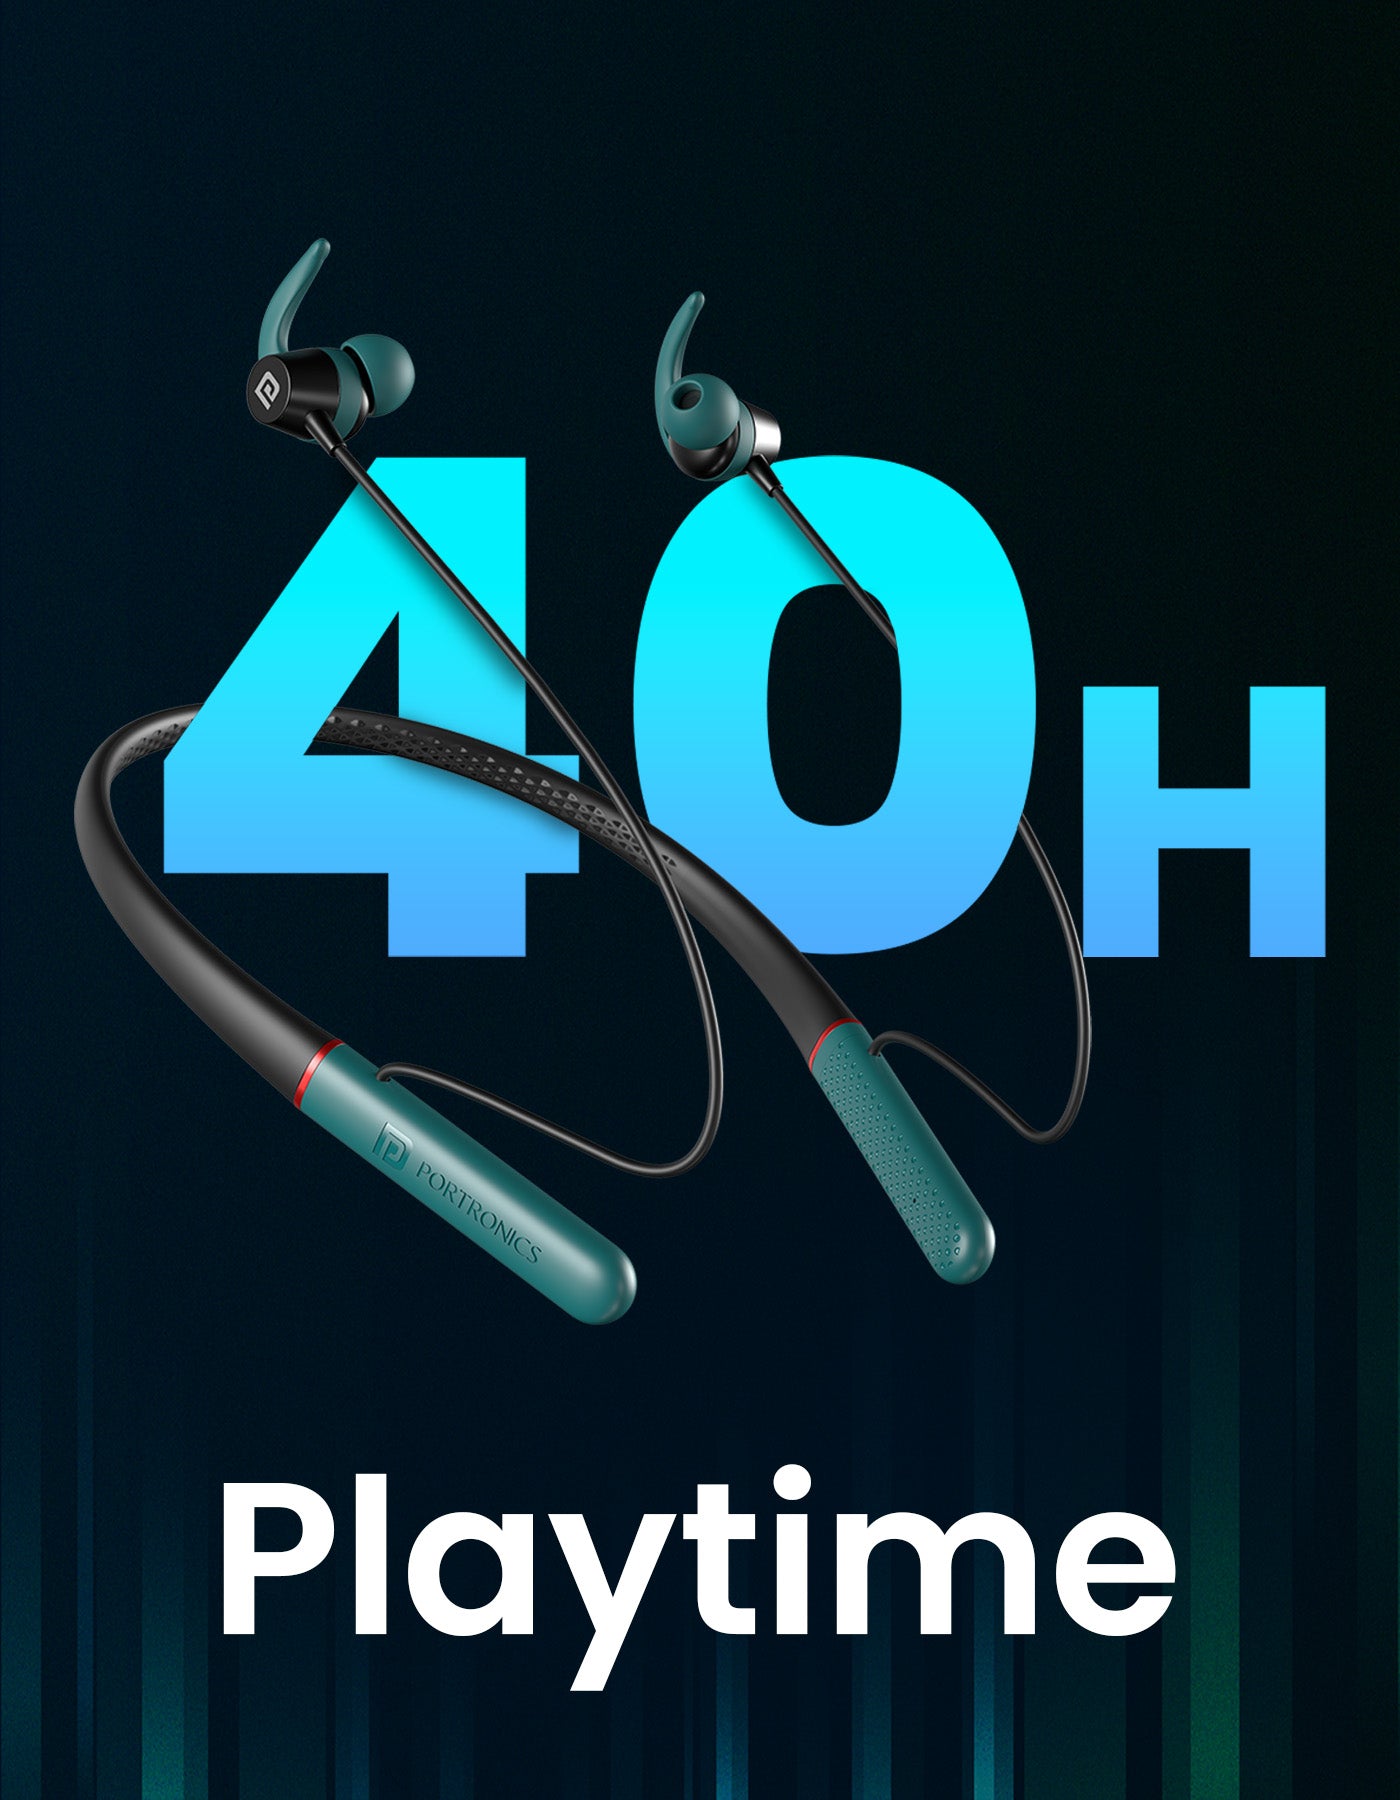 Portronics Harmonics X2 neckband with 40hr playtime Wireless headphone | Portronics Headphones portronics bluetooth earphones